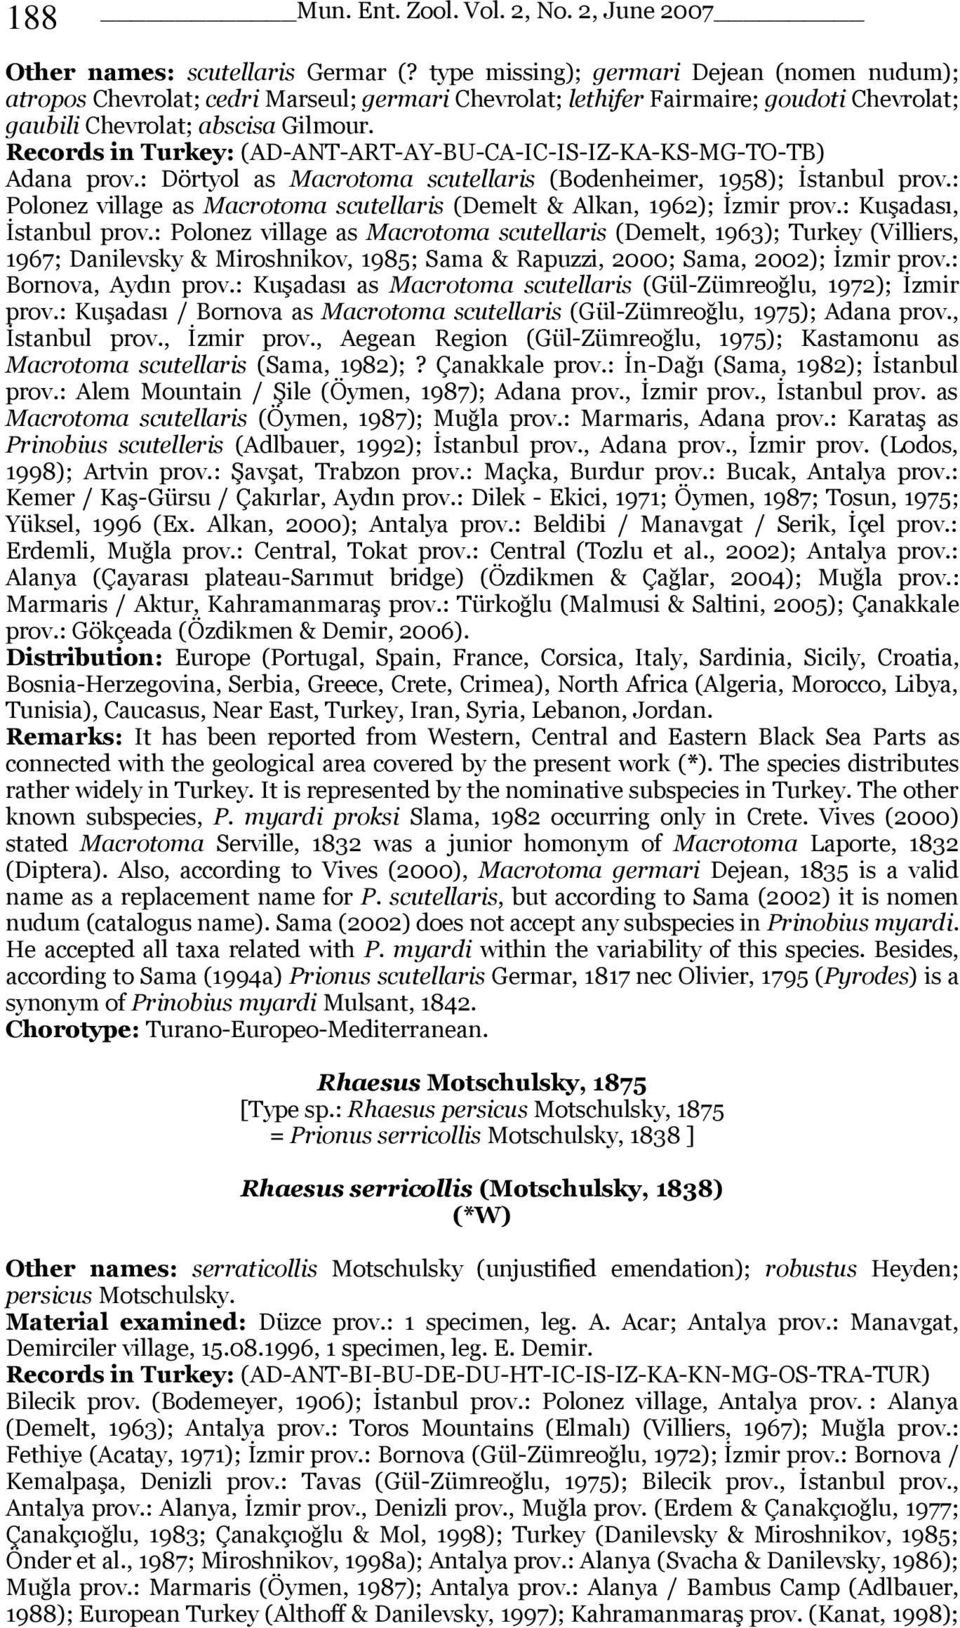 Records in Turkey: (AD-ANT-ART-AY-BU-CA-IC-IS-IZ-KA-KS-MG-TO-TB) Adana prov.: Dörtyol as Macrotoma scutellaris (Bodenheimer, 1958); Ġstanbul prov.